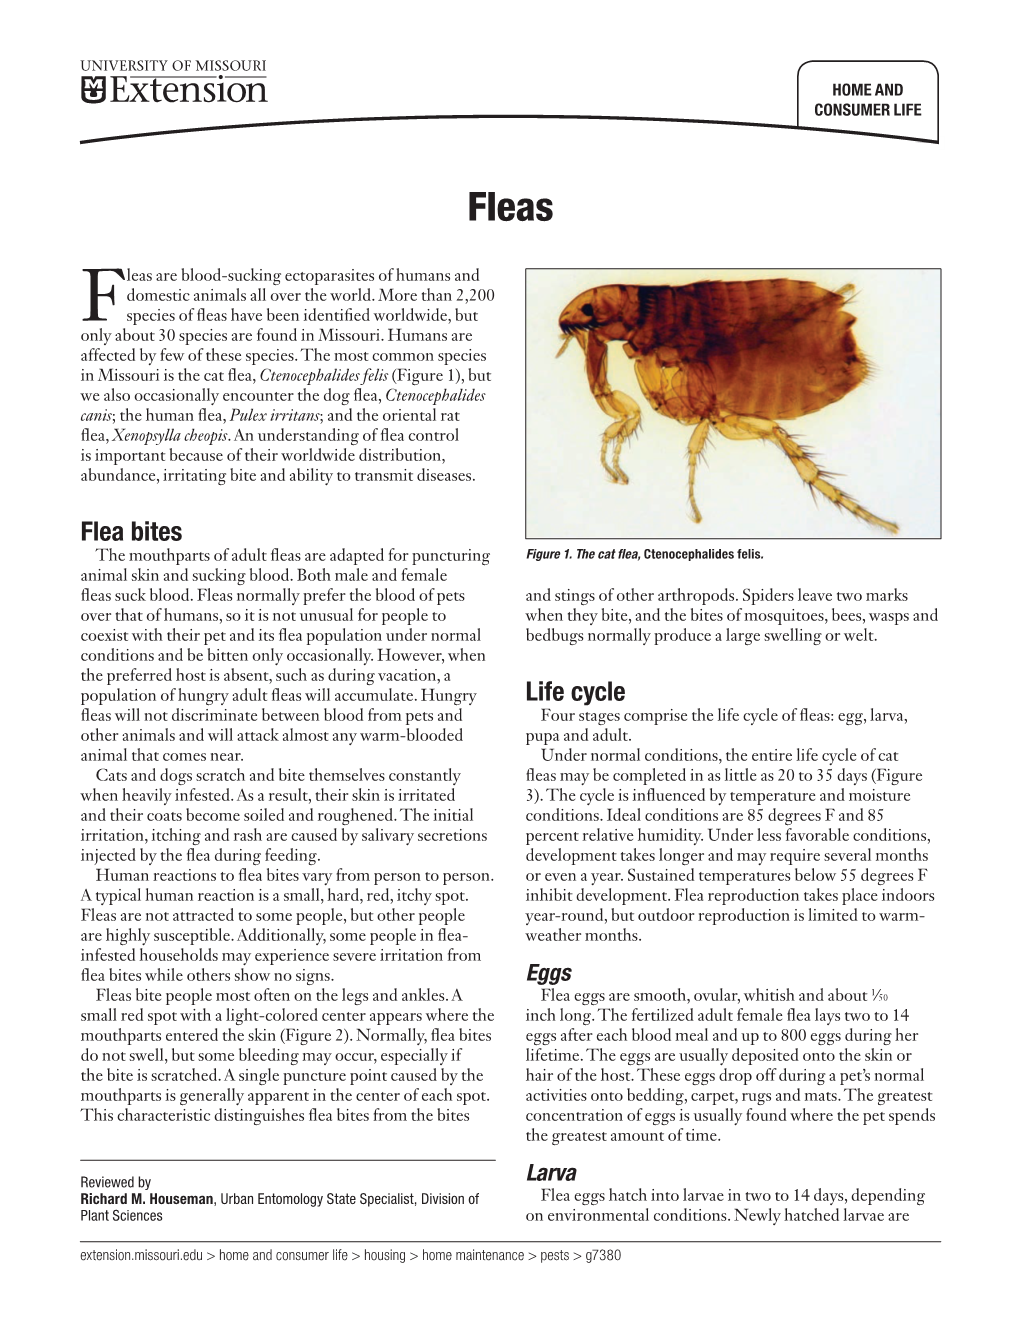 Flea Bites Life Cycle